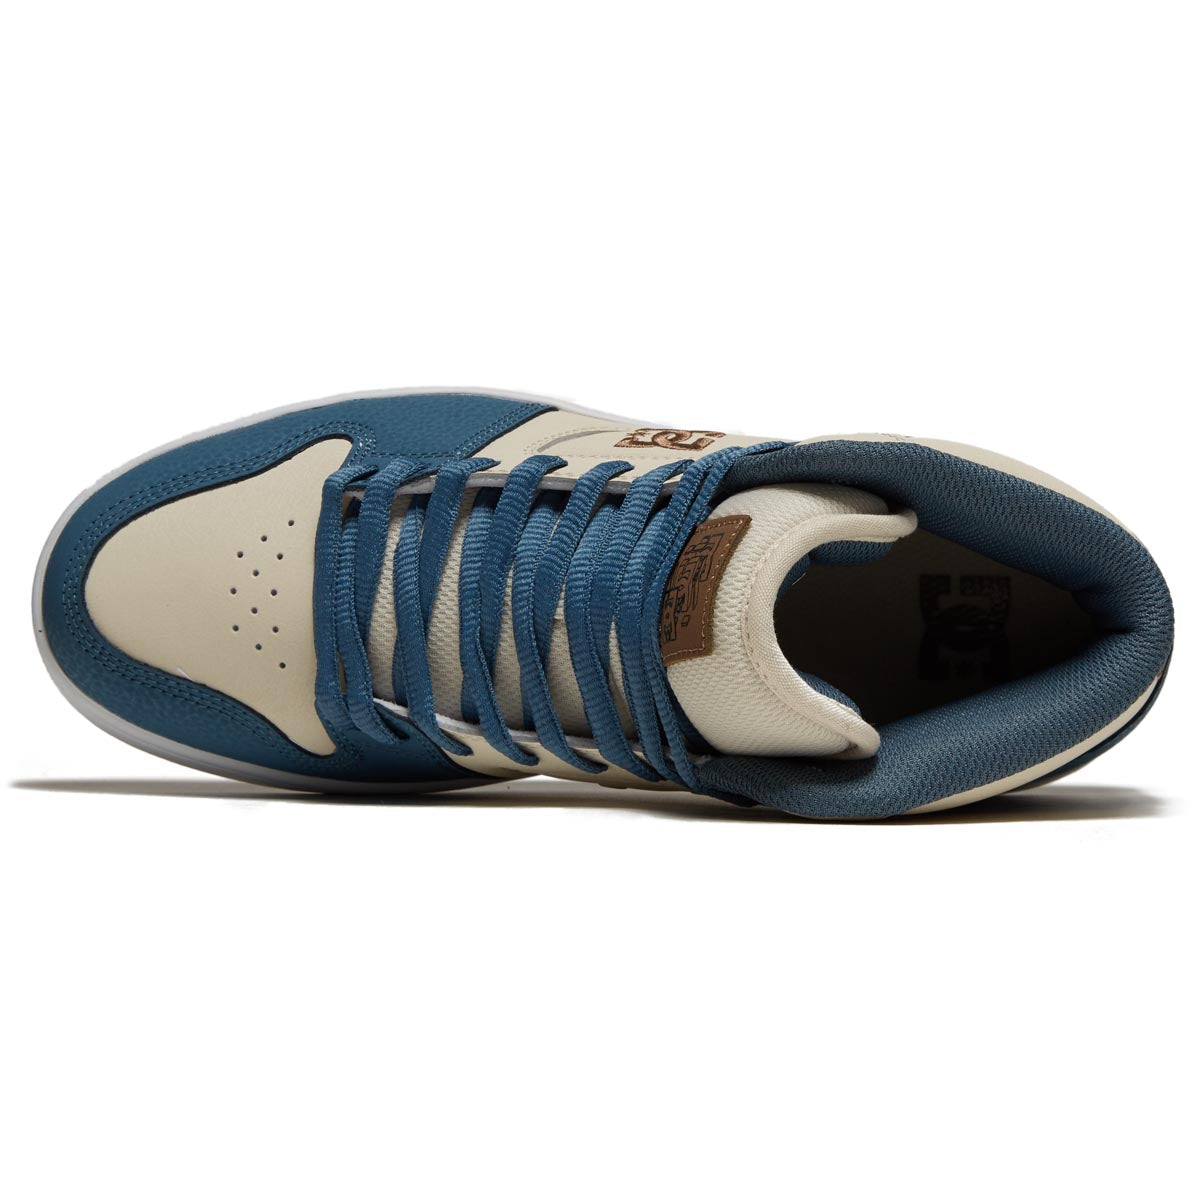 DC Manteca 4 Hi Shoes - Grey/Blue/White image 3